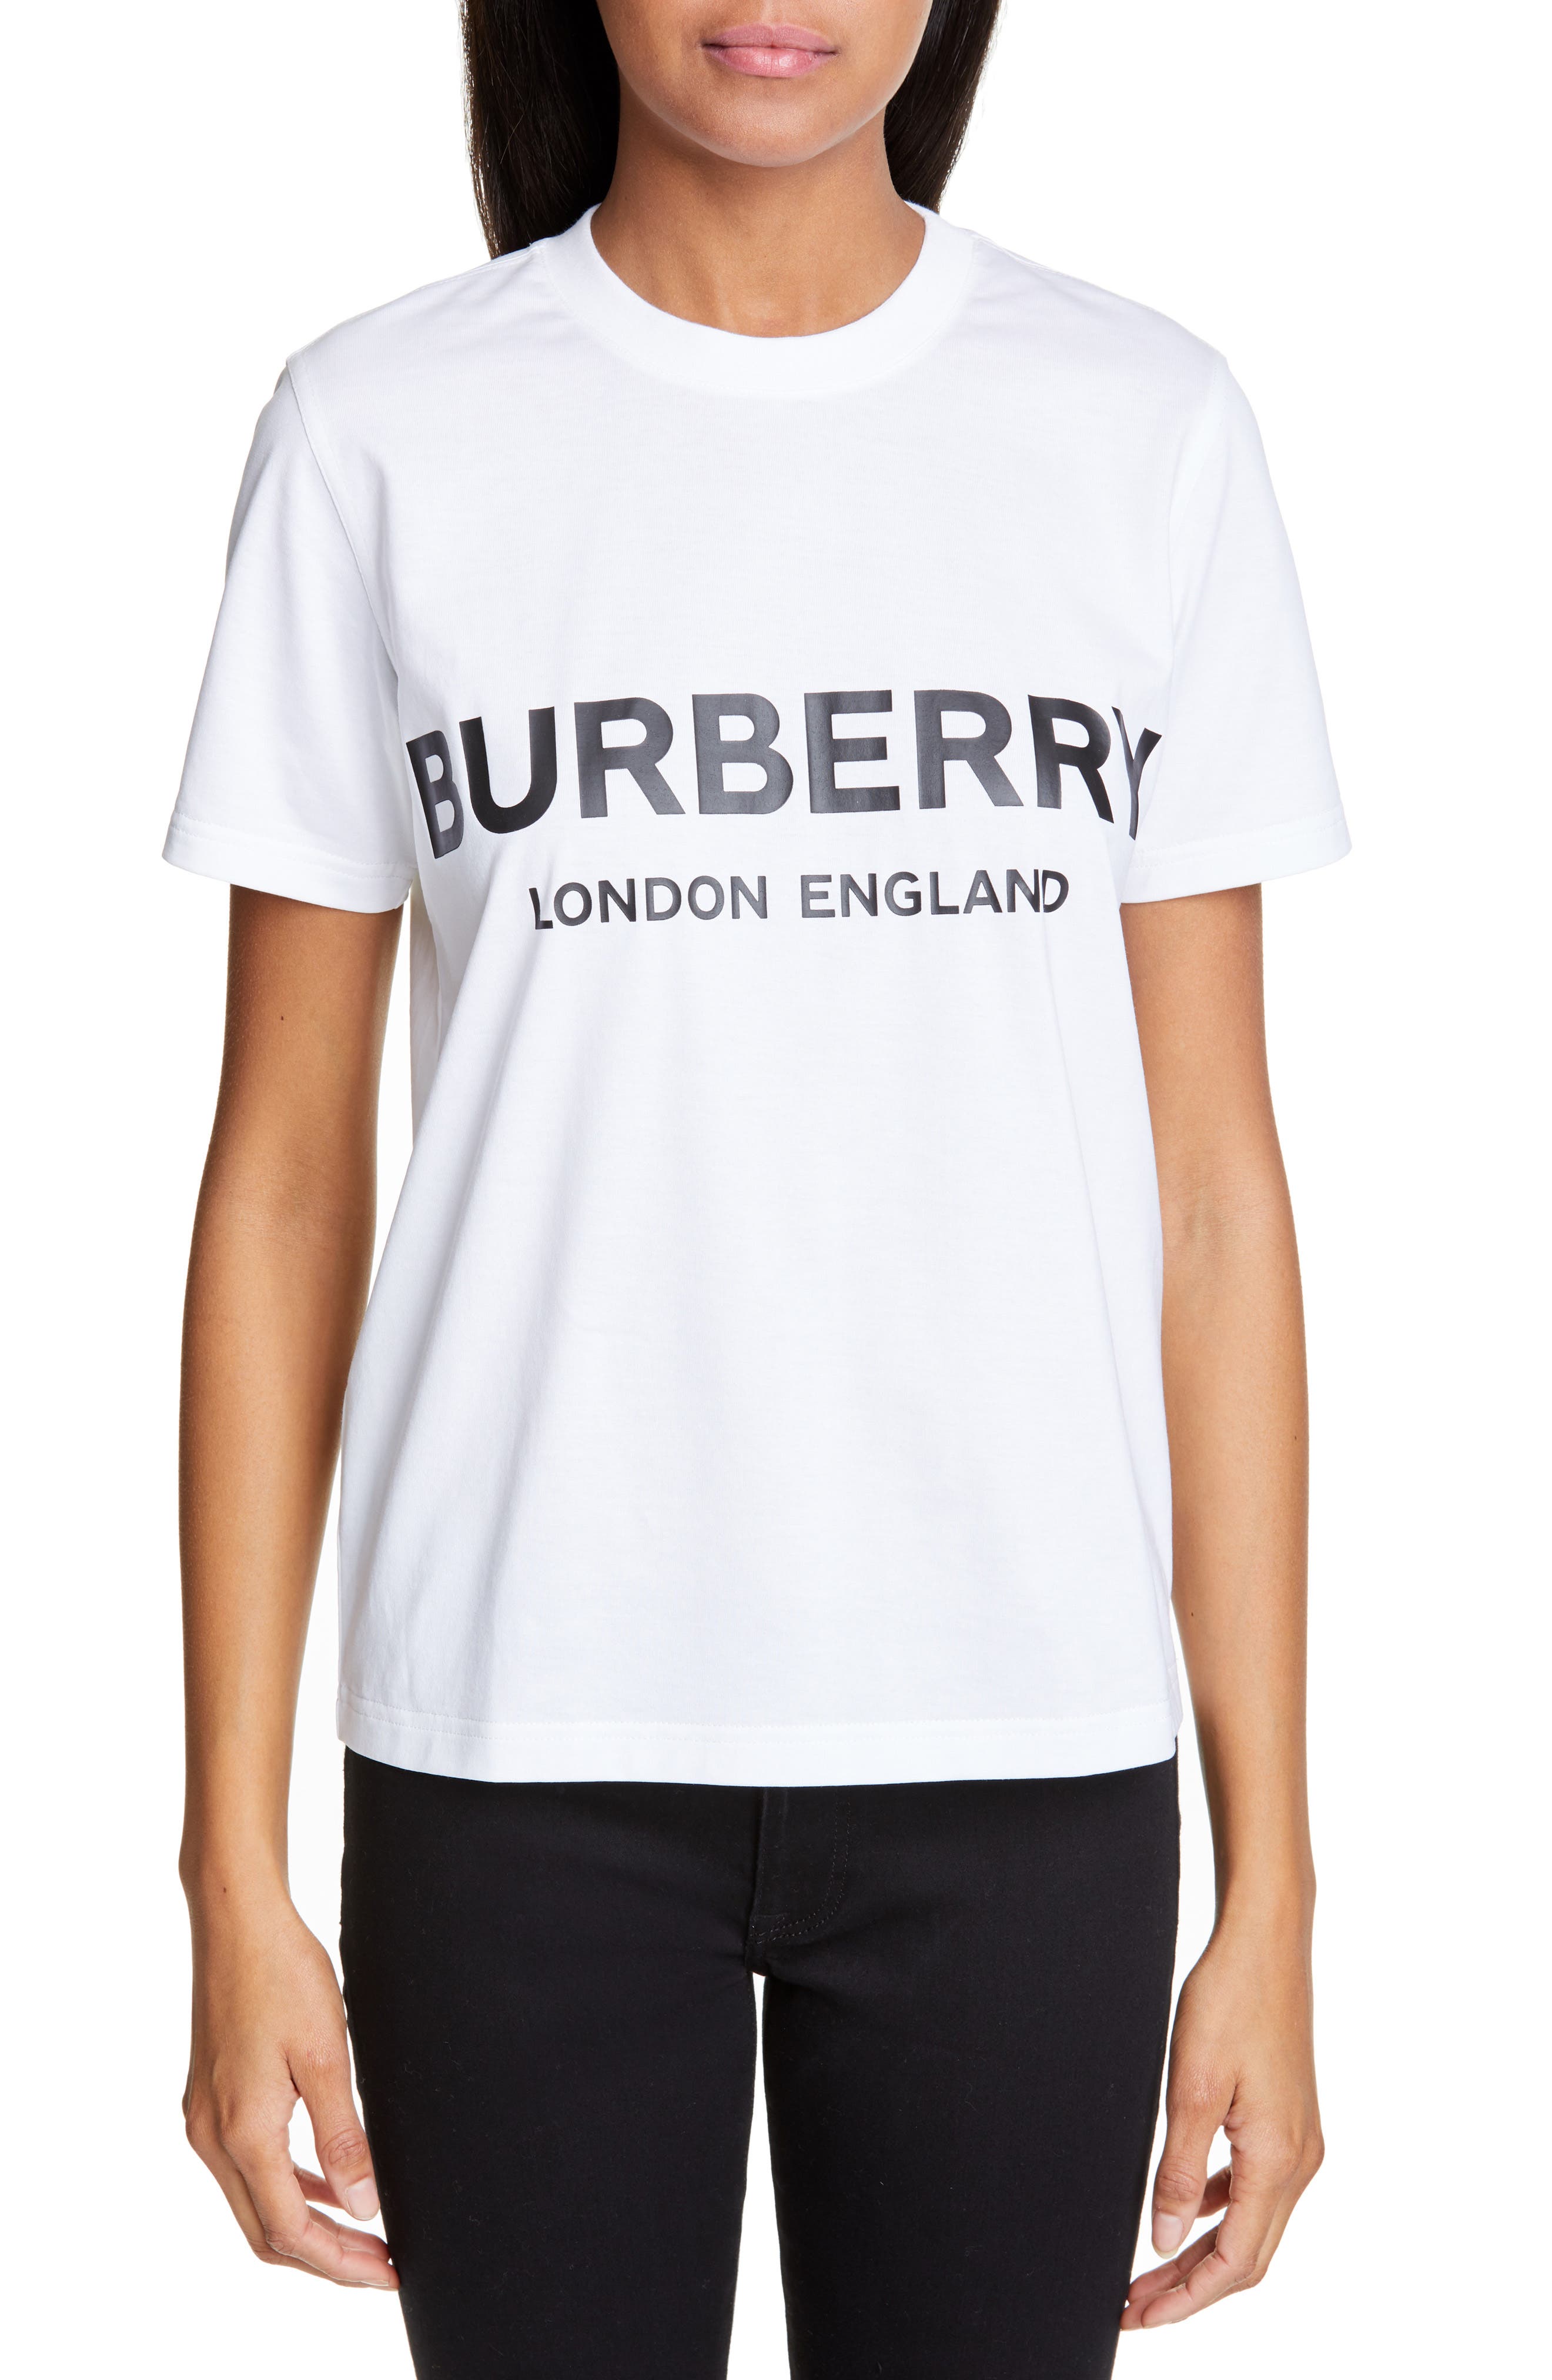 burberry t shirt woman